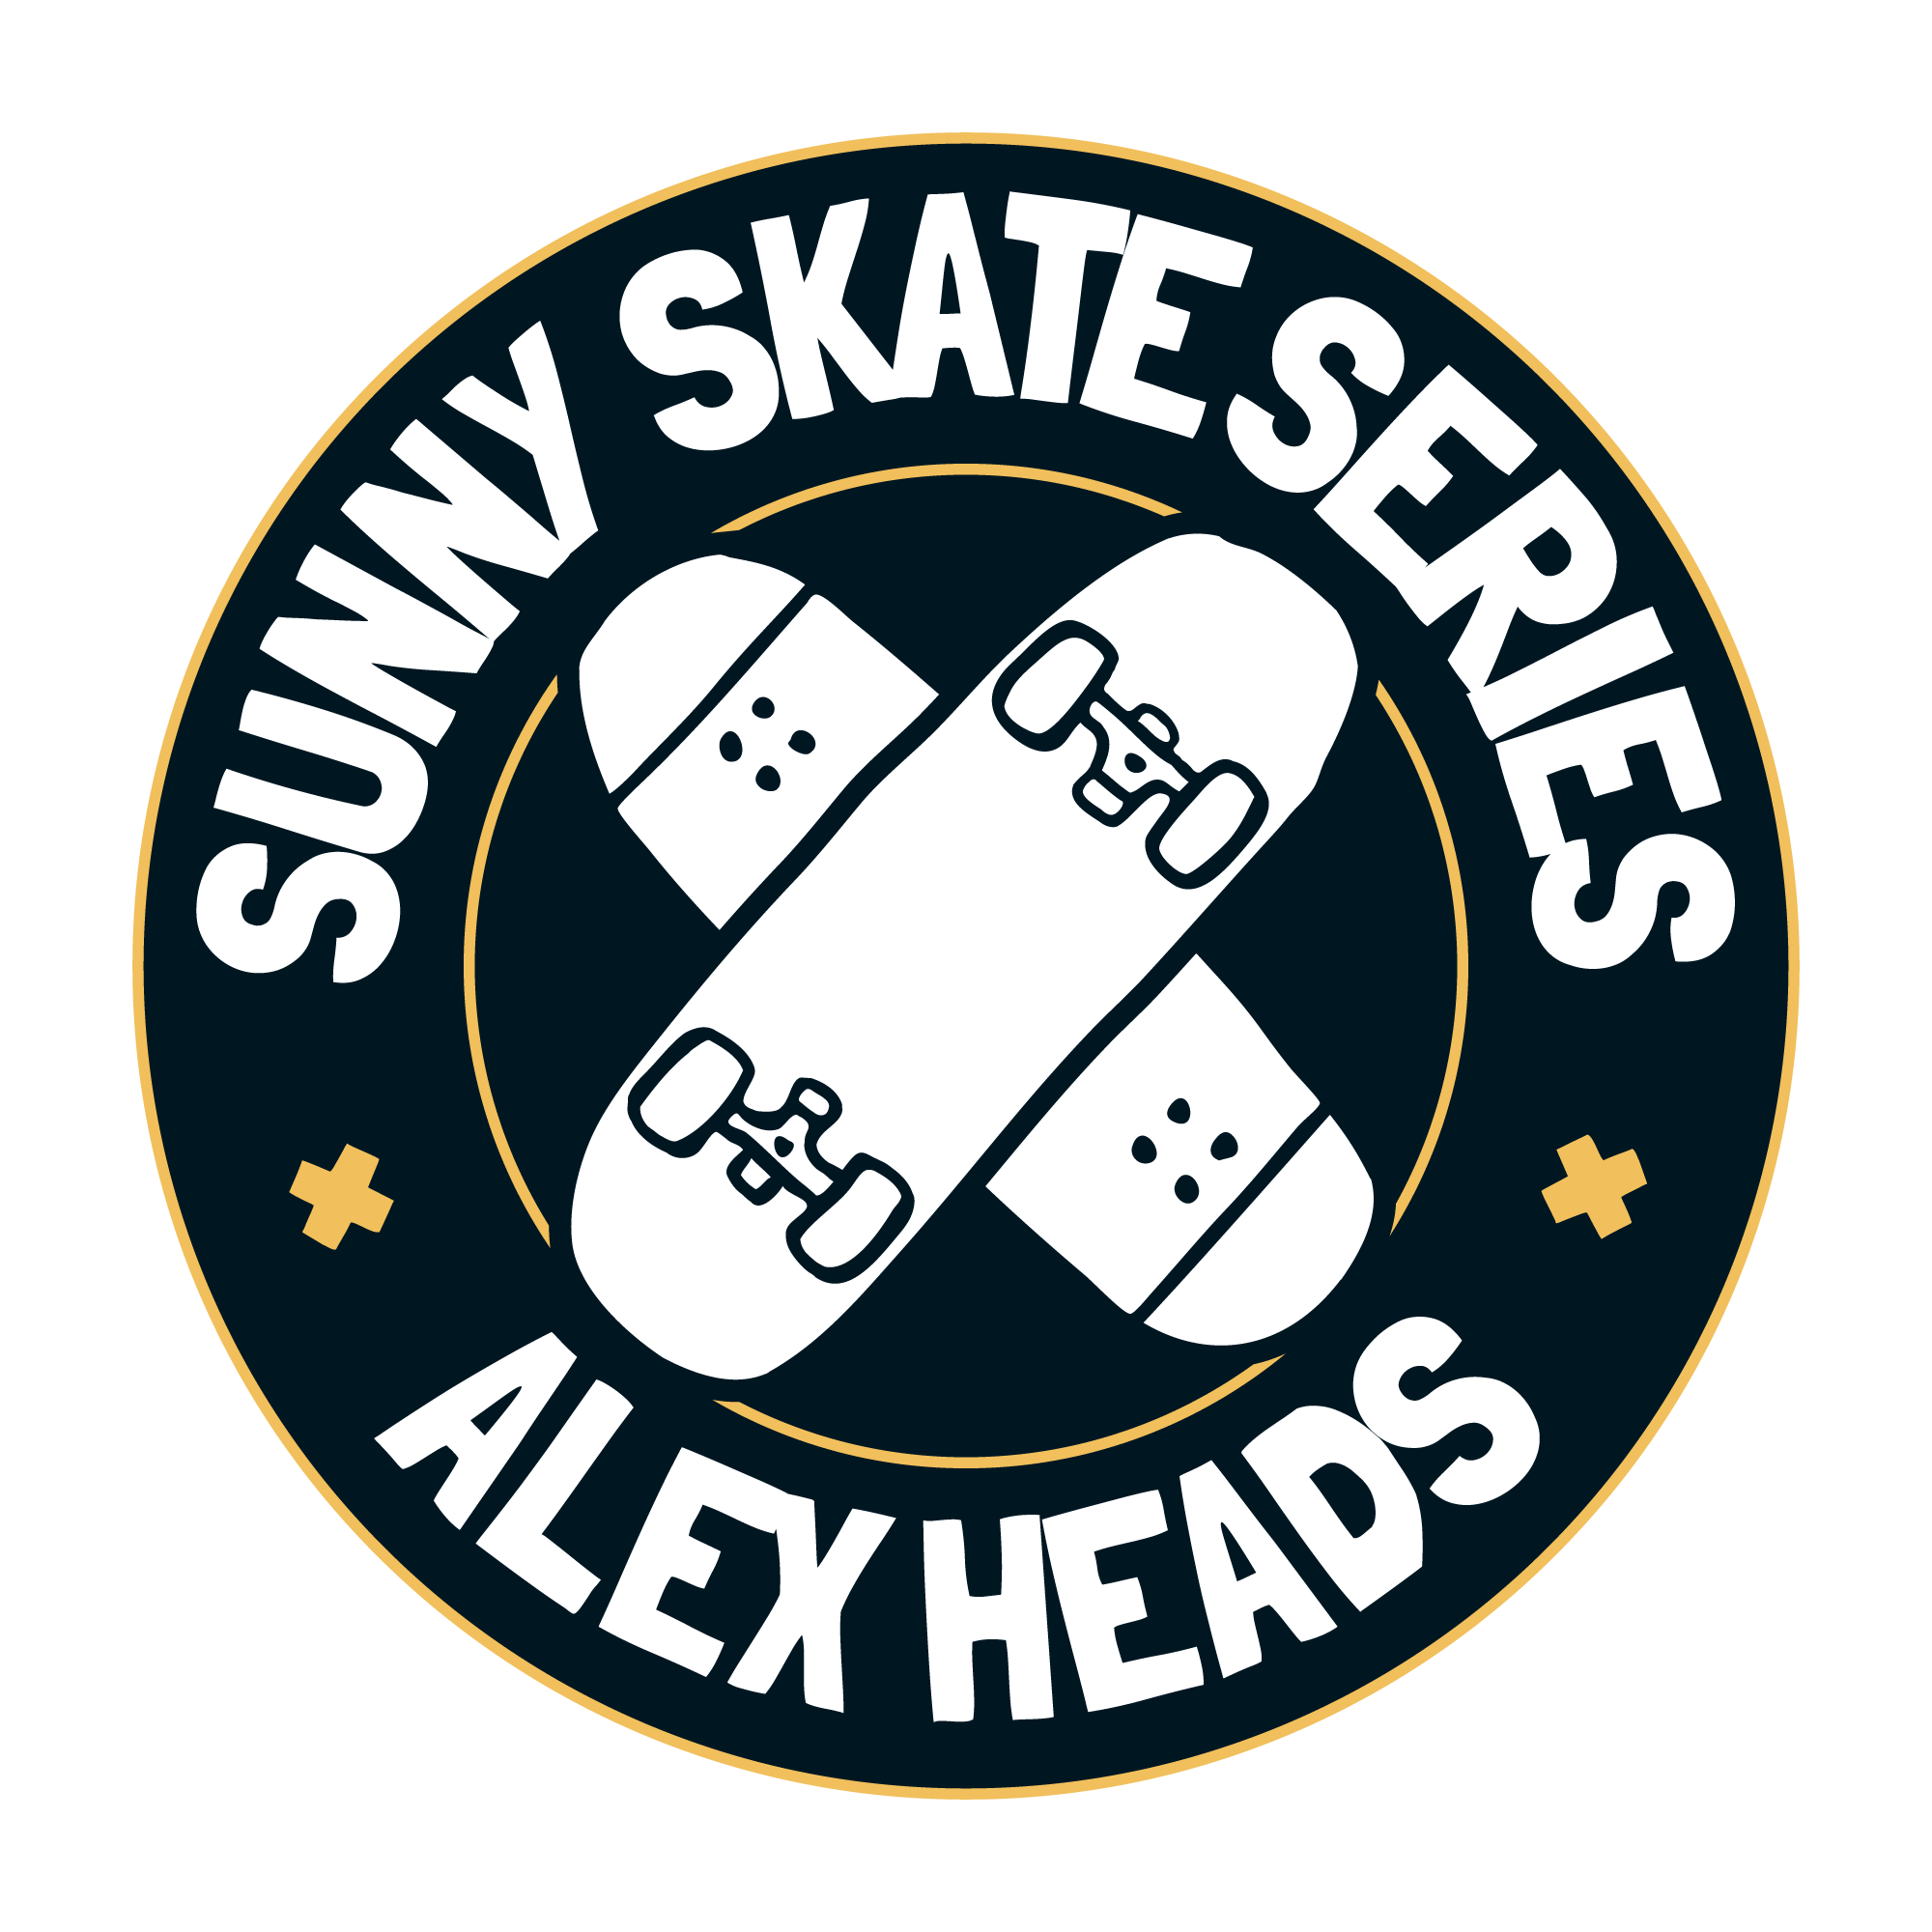 sunny skate series logo